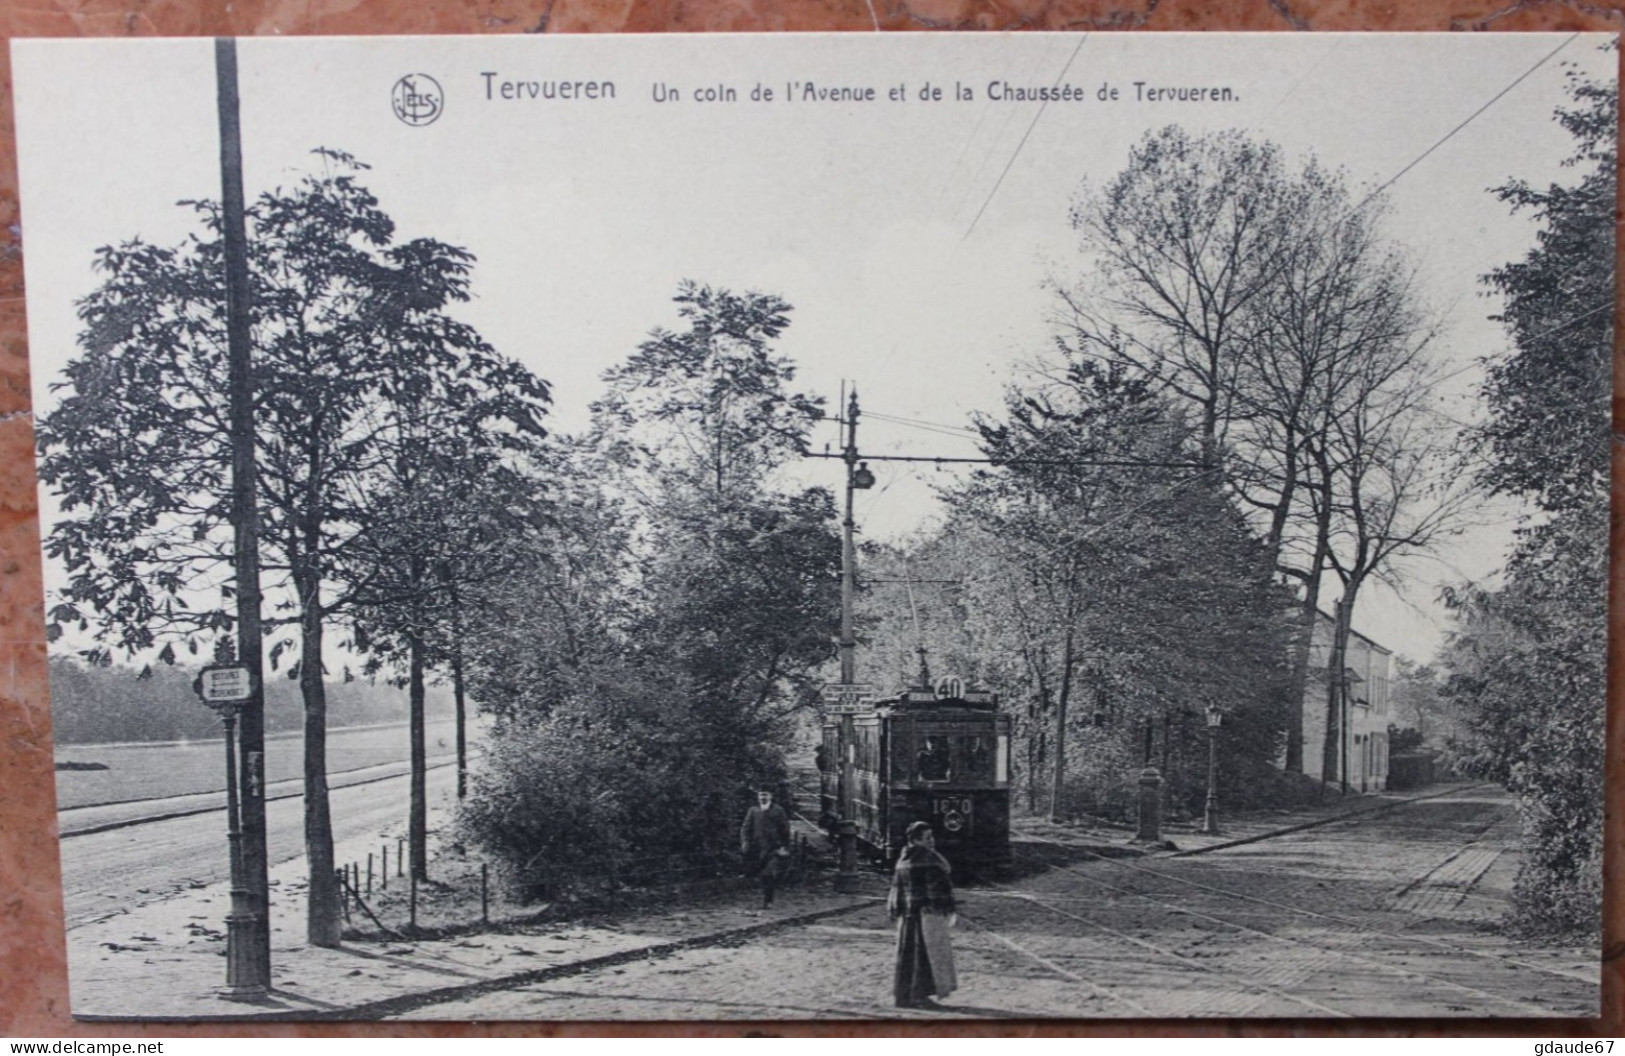 TERVUREN / TERVUEREN - UN COIN DE L'AVENUE ET DE LA CHAUSSEE - TRAM - Tervuren